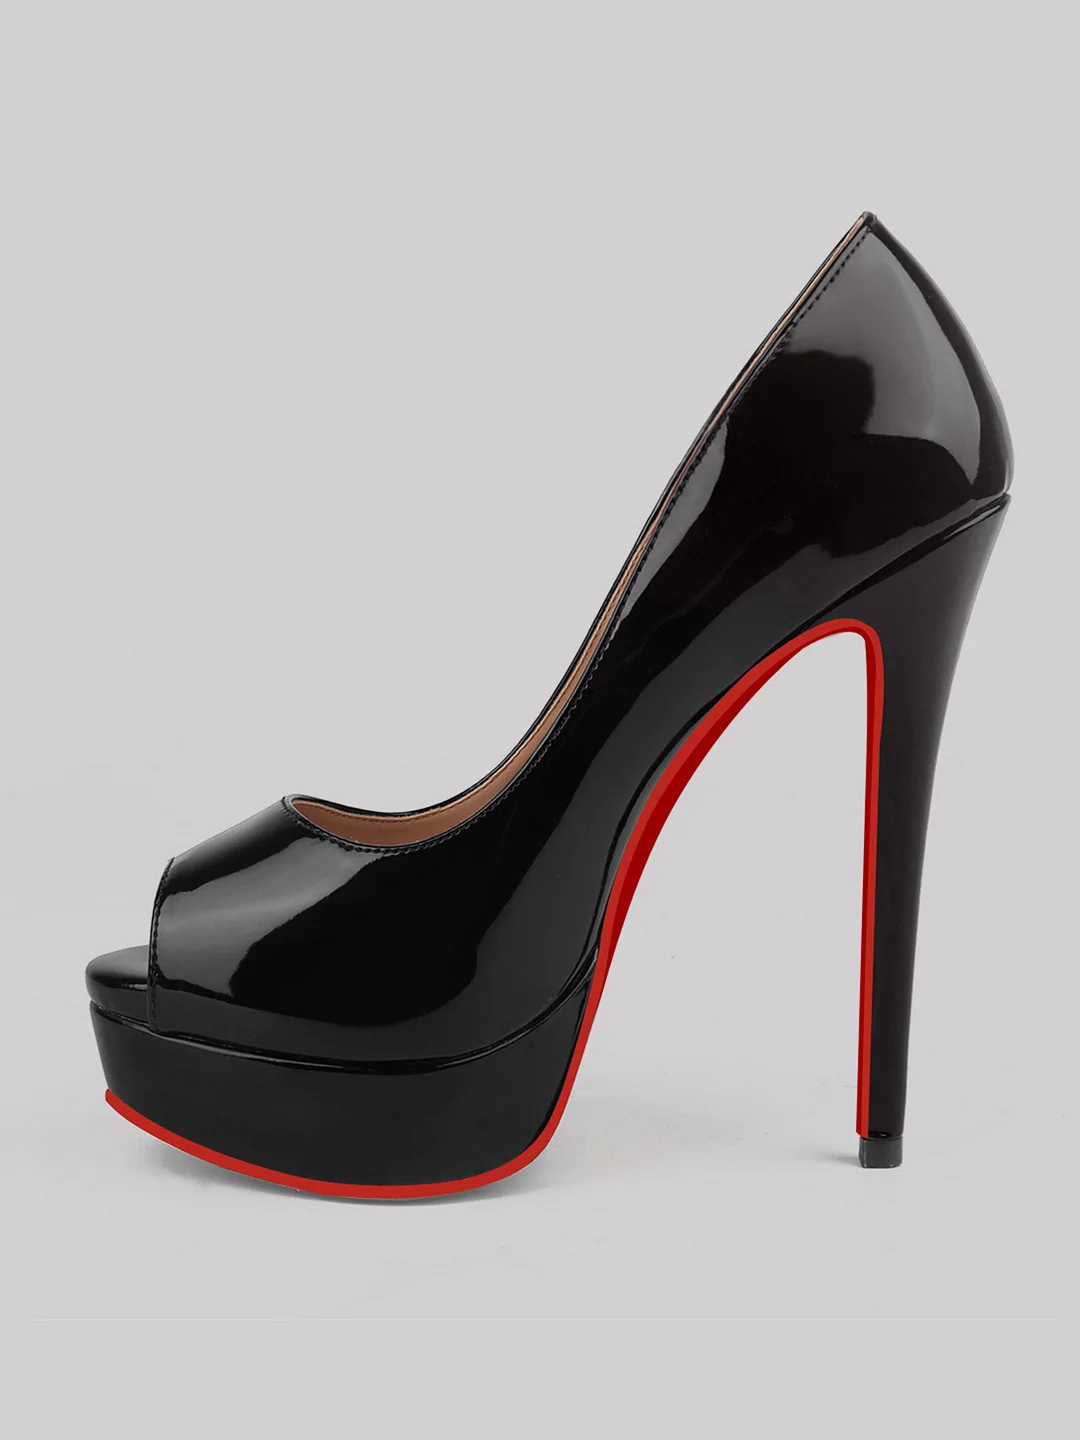 150mm Women's Platform High Heels Red Bottoms Peep Toe Pumps Patent Shoes